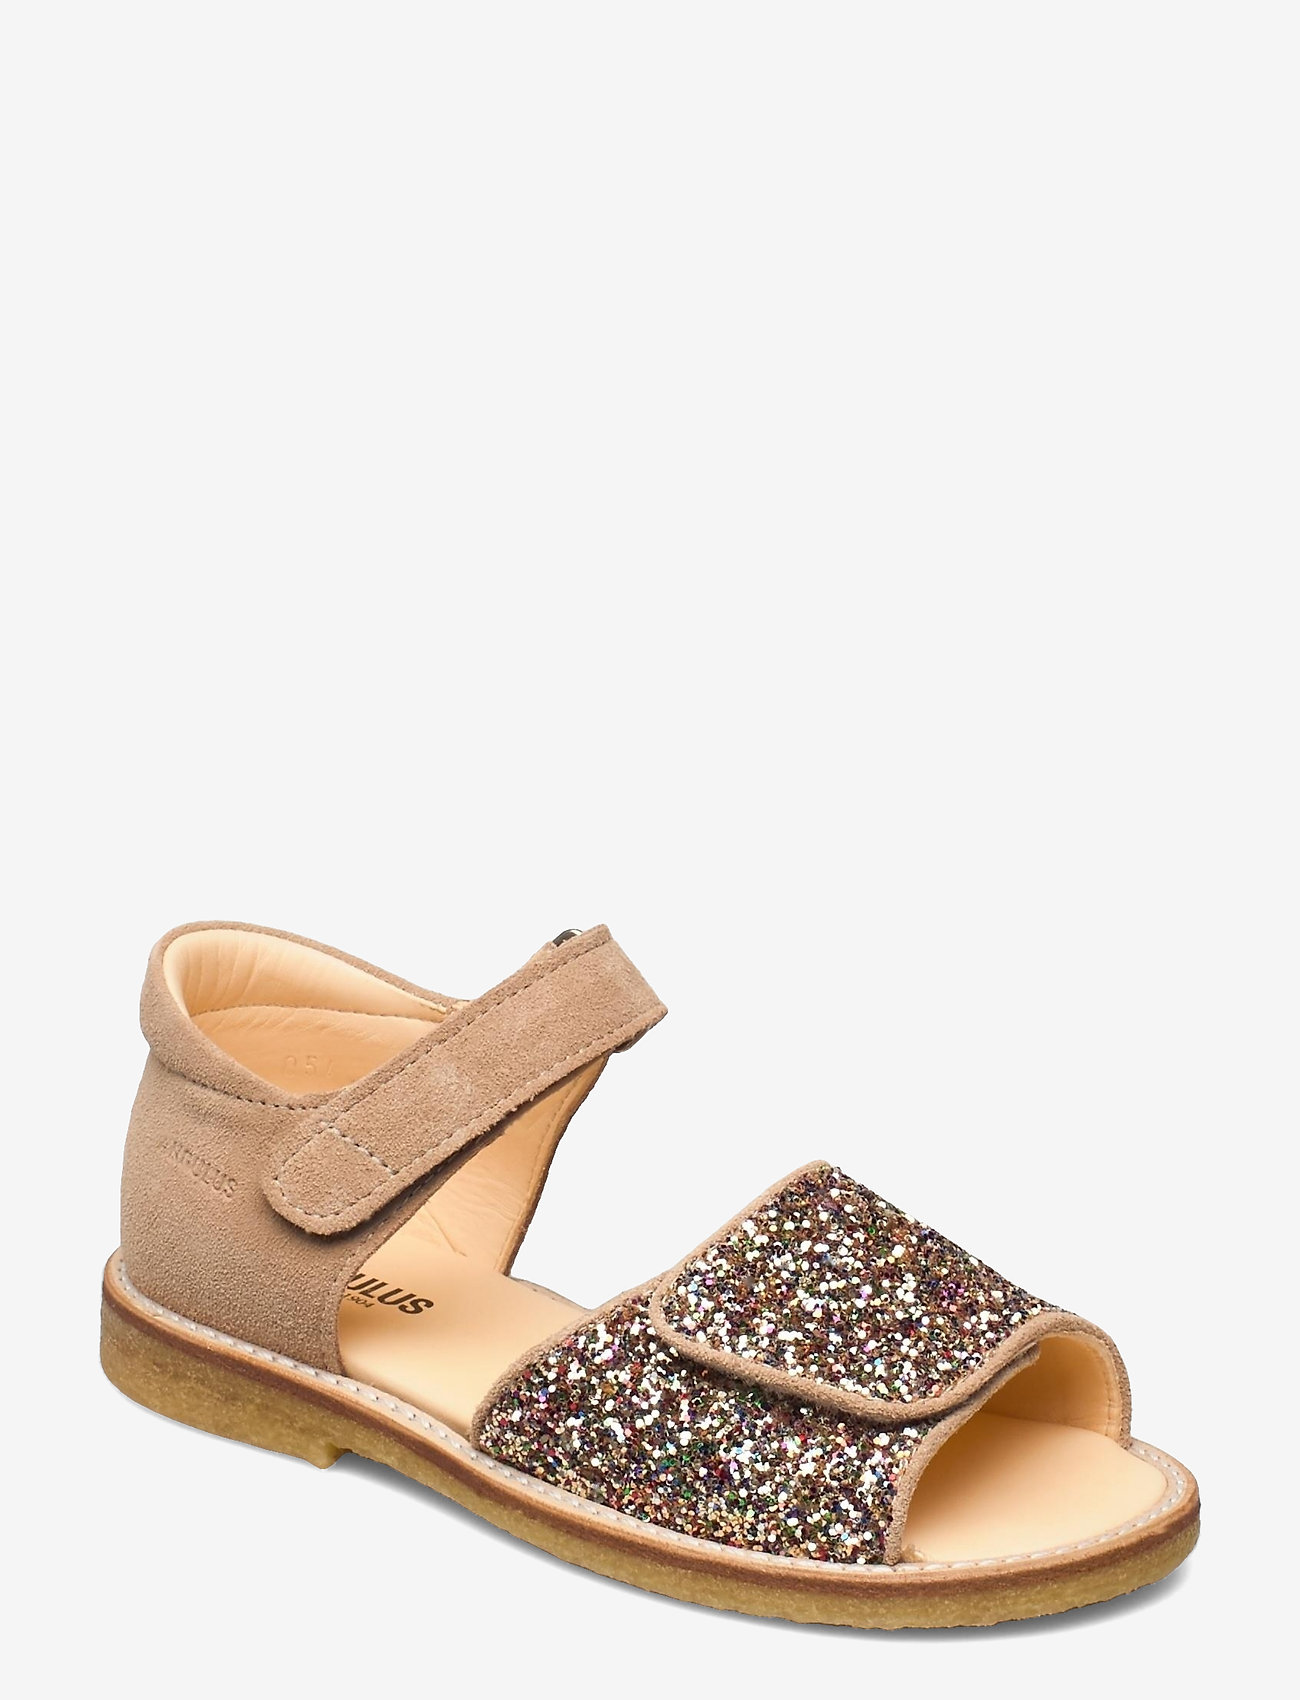 ANGULUS - Sandals - flat - open toe - clo - summer savings - 1149/2488 sand/multi glitter - 0